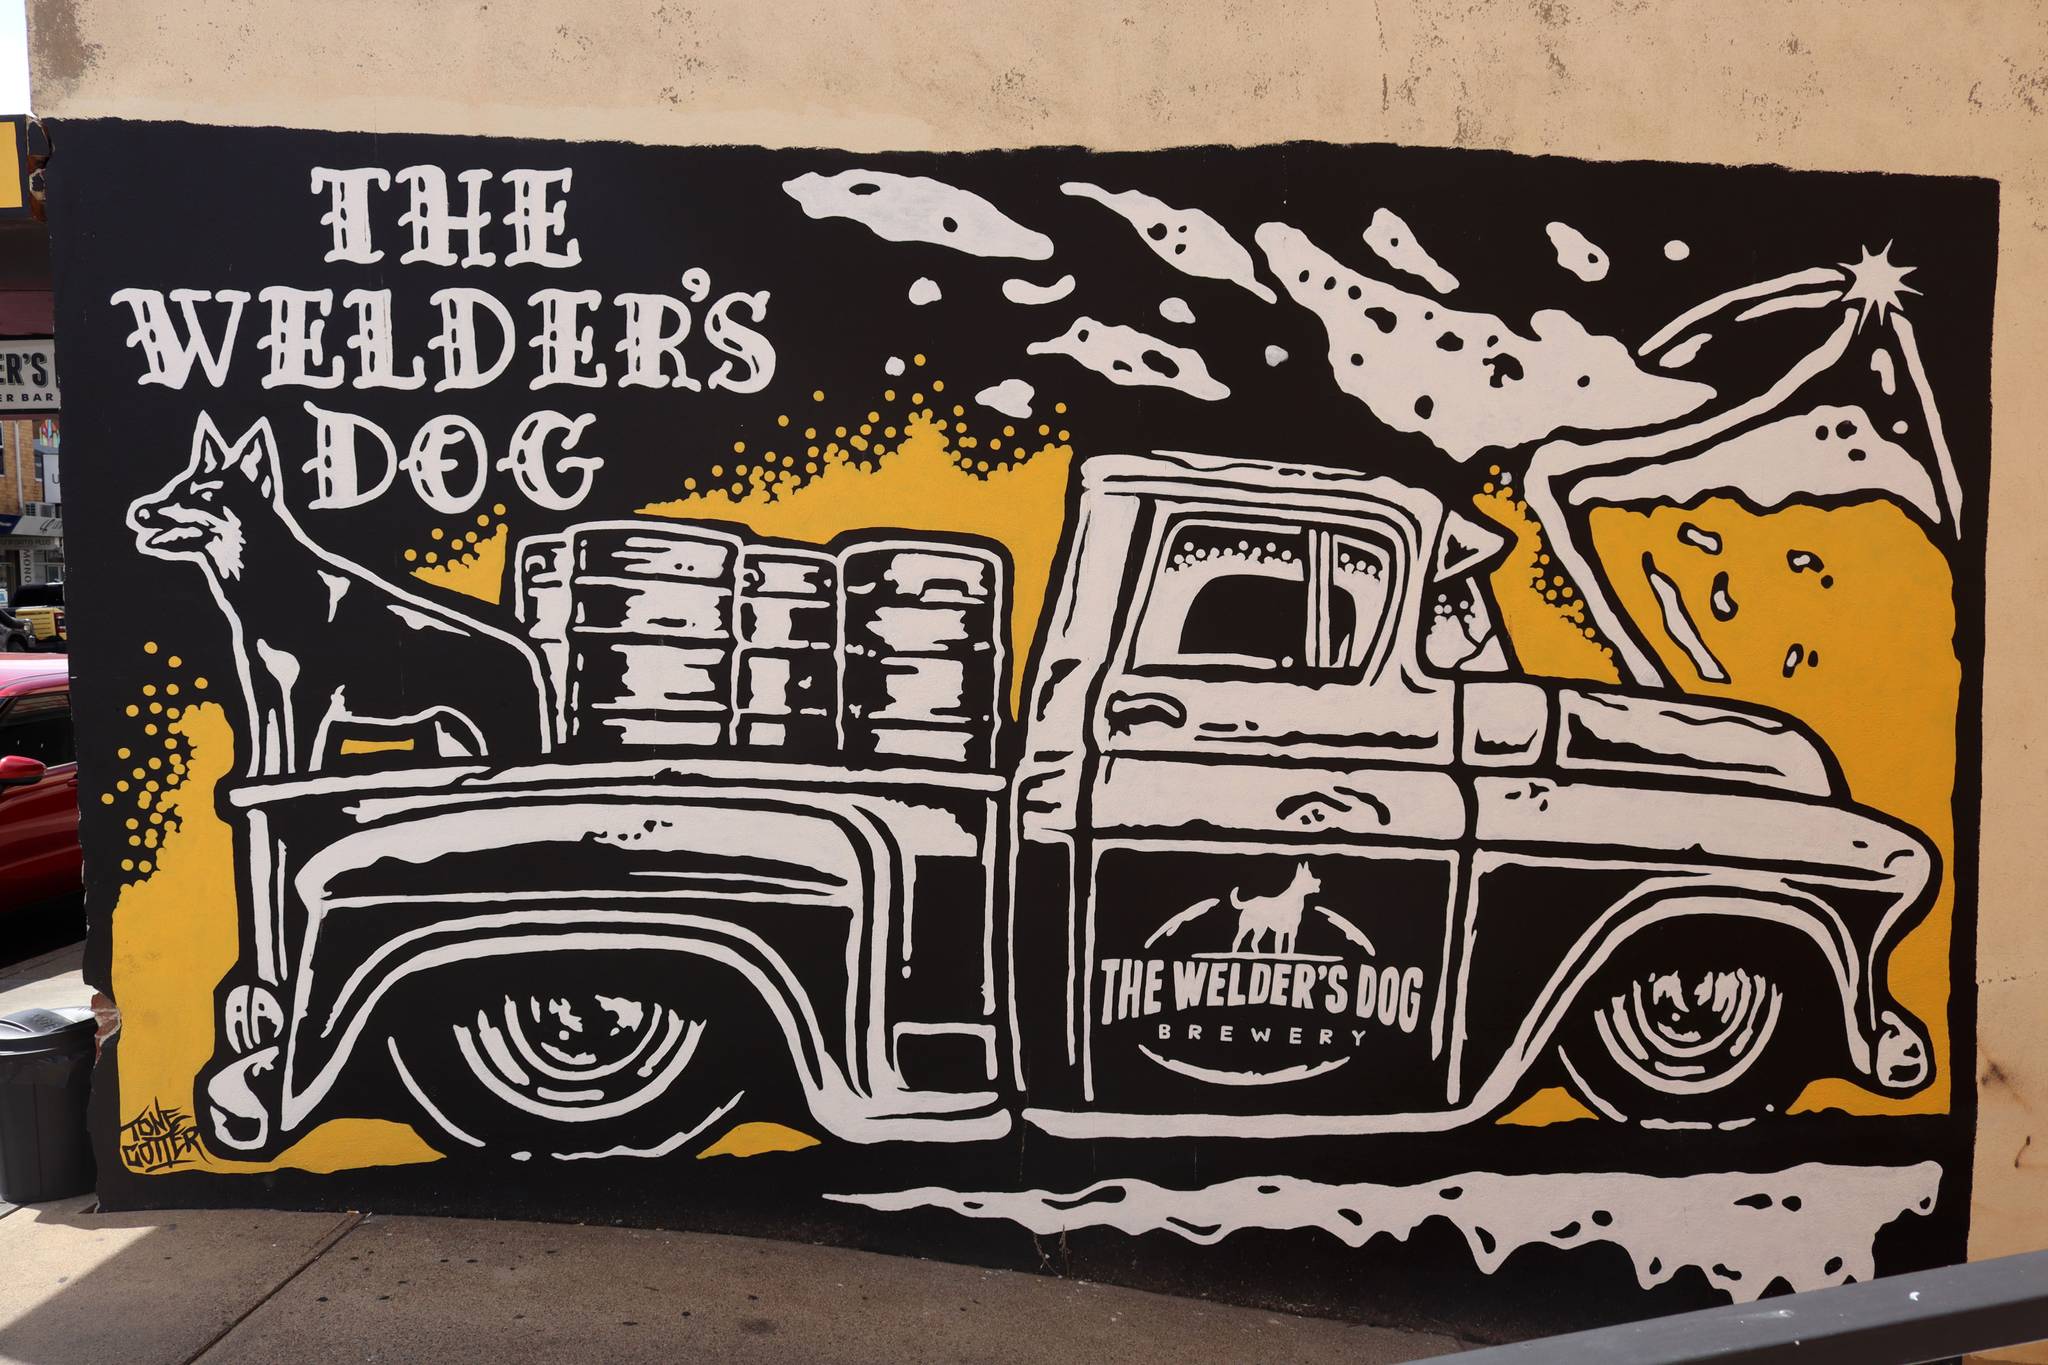 Tone Cotter, Jake Abra&mdash;The Welder's Dog